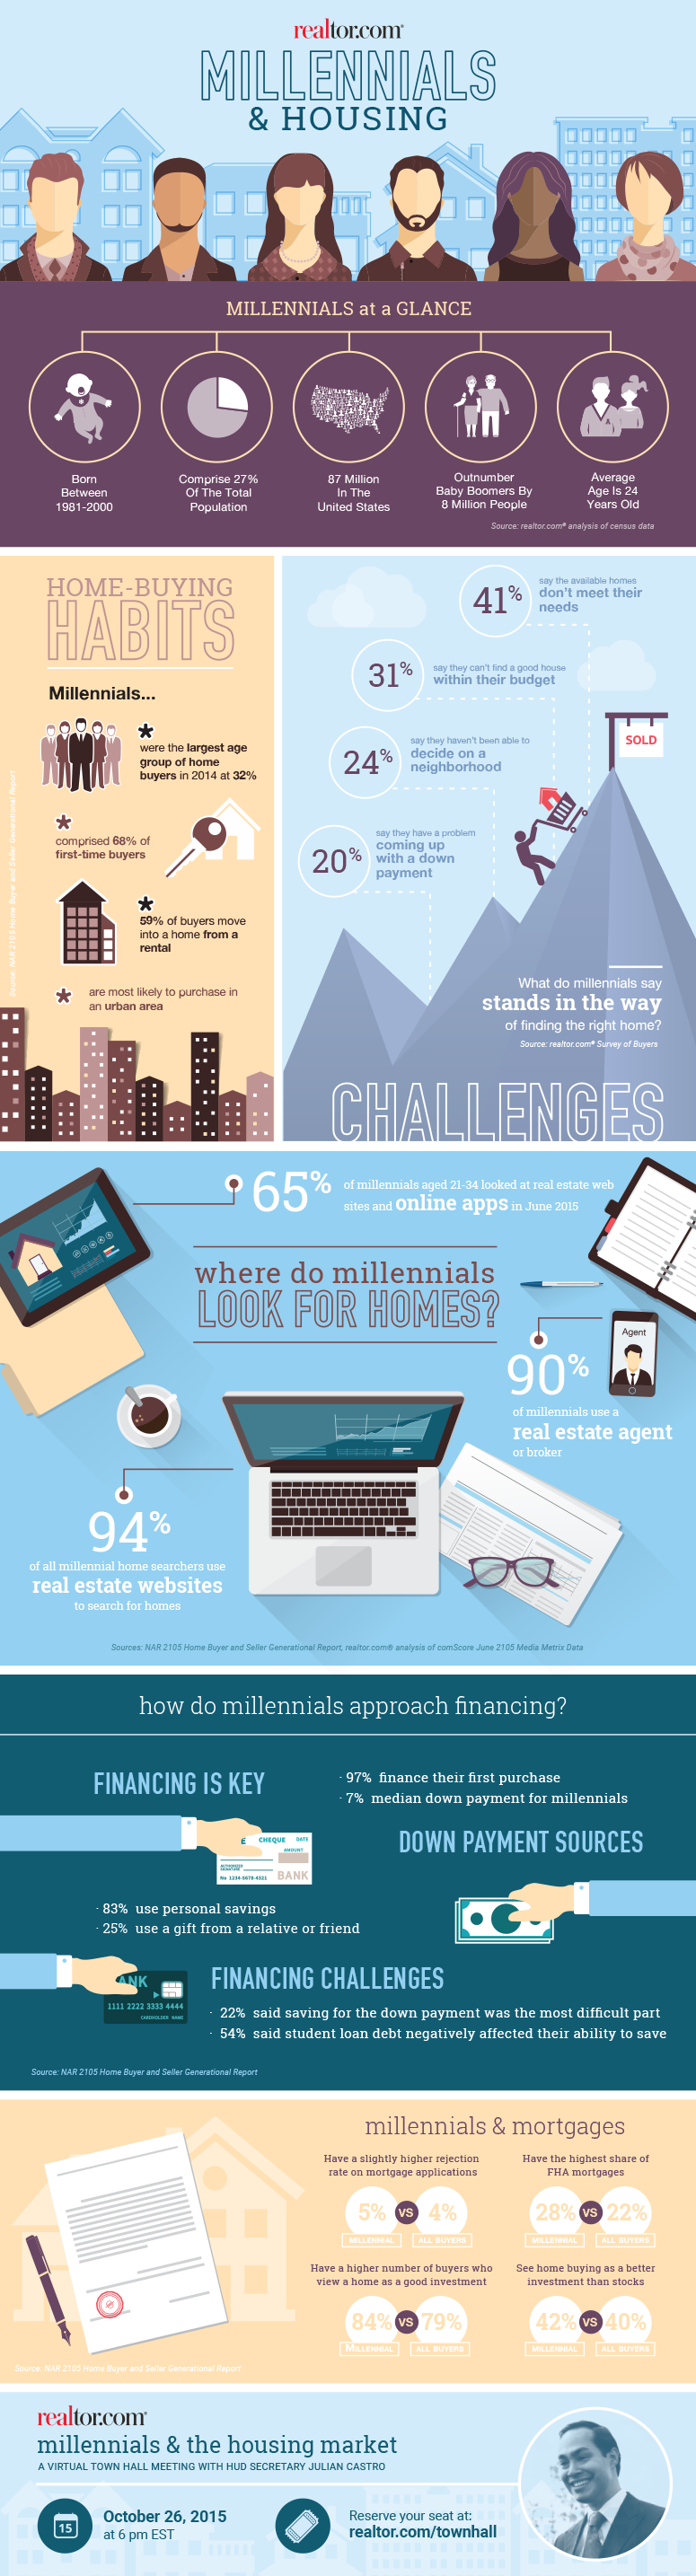 Infographic: Millennials & Housing (realtor.com)